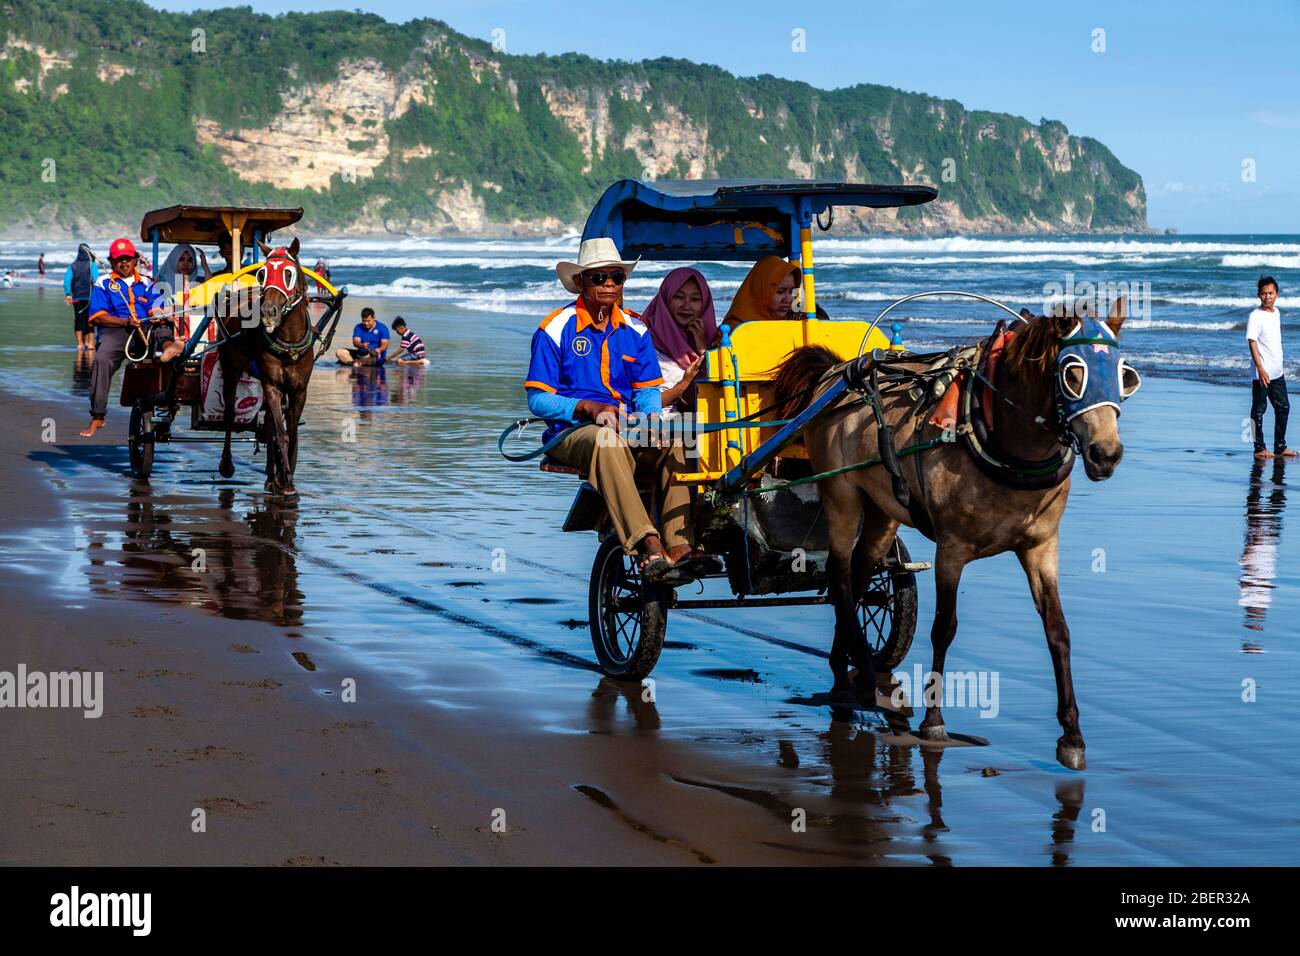 Indonesian People Enjoying Horse and Carriage Rides On Parangtritis Beach, Yogyakarta, Indonesia. Stock Photo